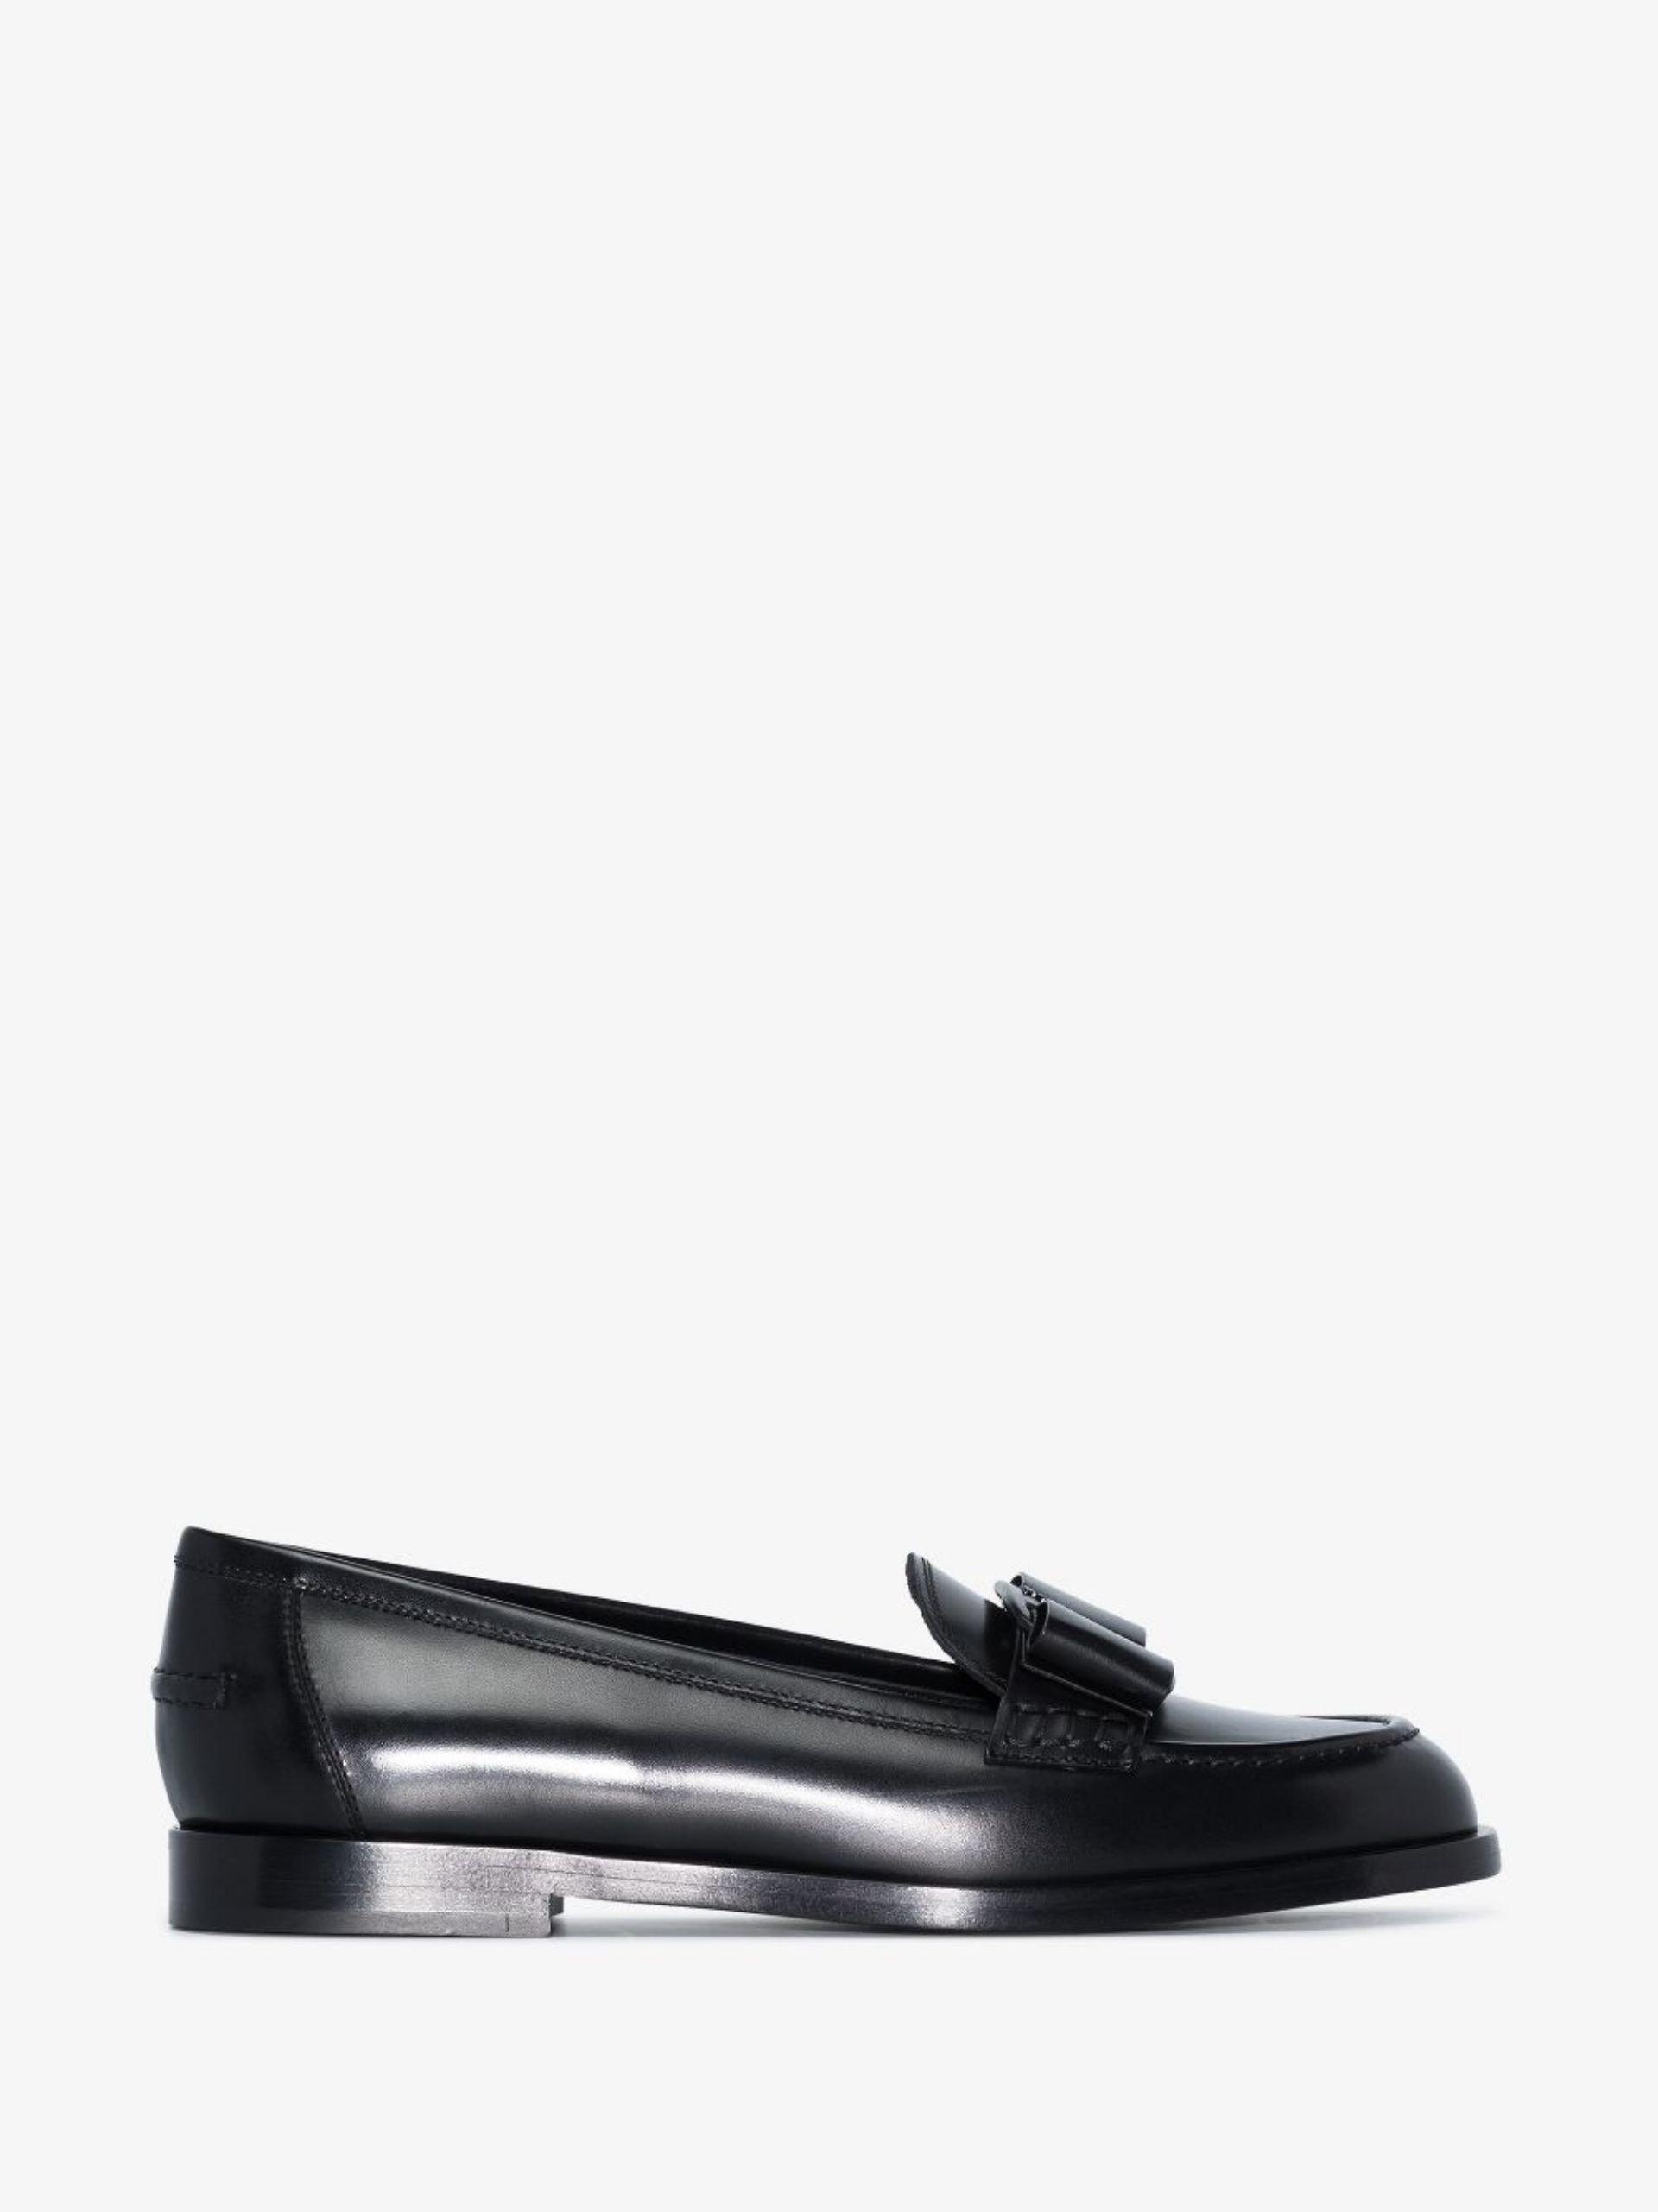 Ferragamo Vivaldo Leather Shoes in Black | Lyst